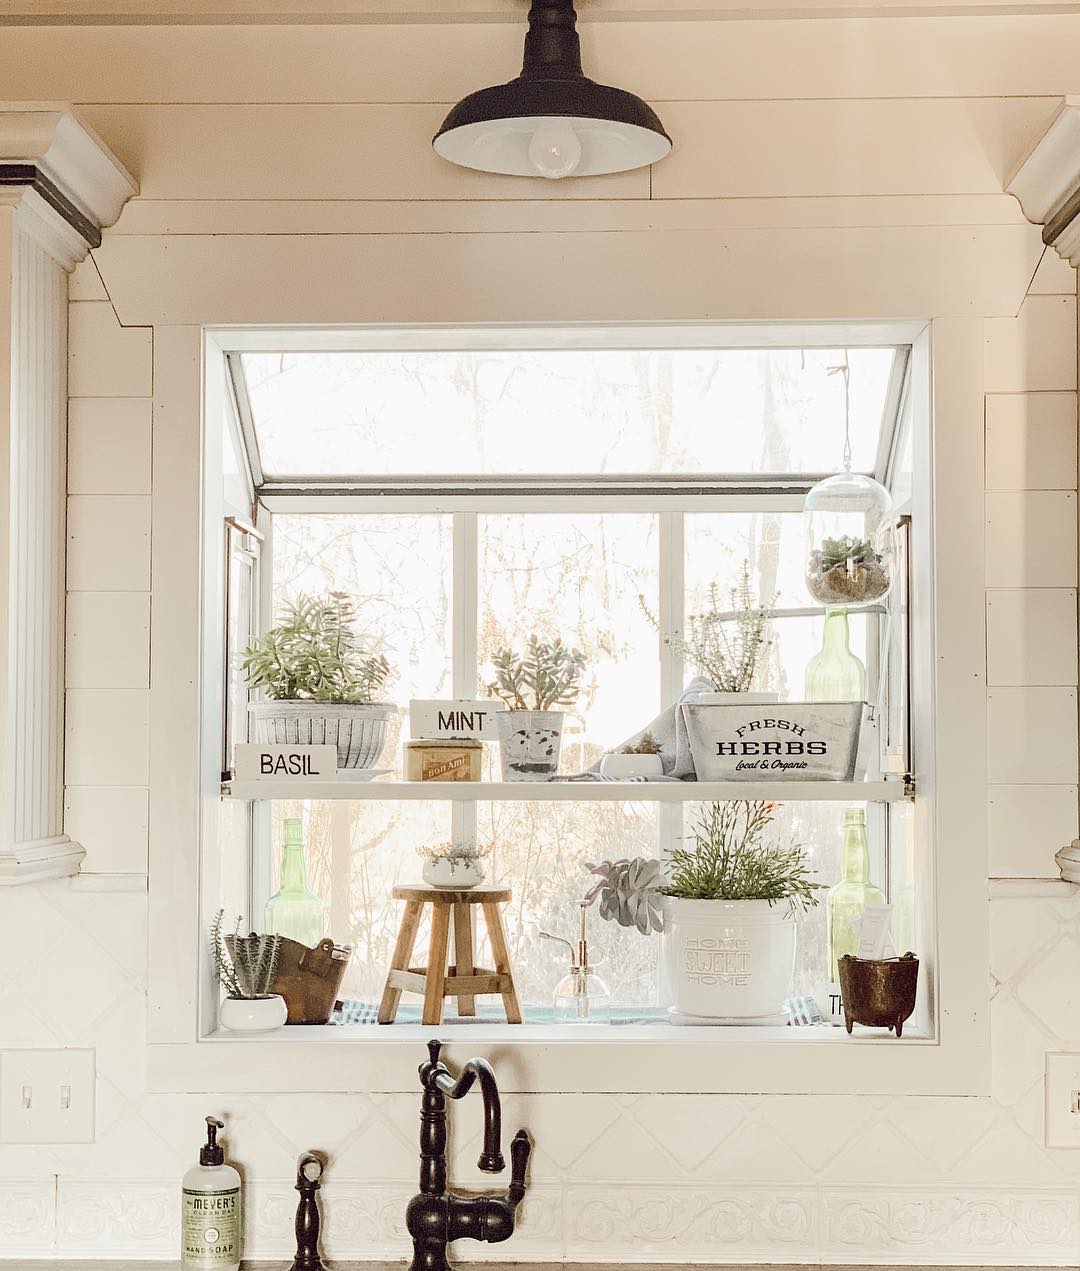 Kitchen window sill holding plants. Photo by Instagram user @rustyrosefarmhouse